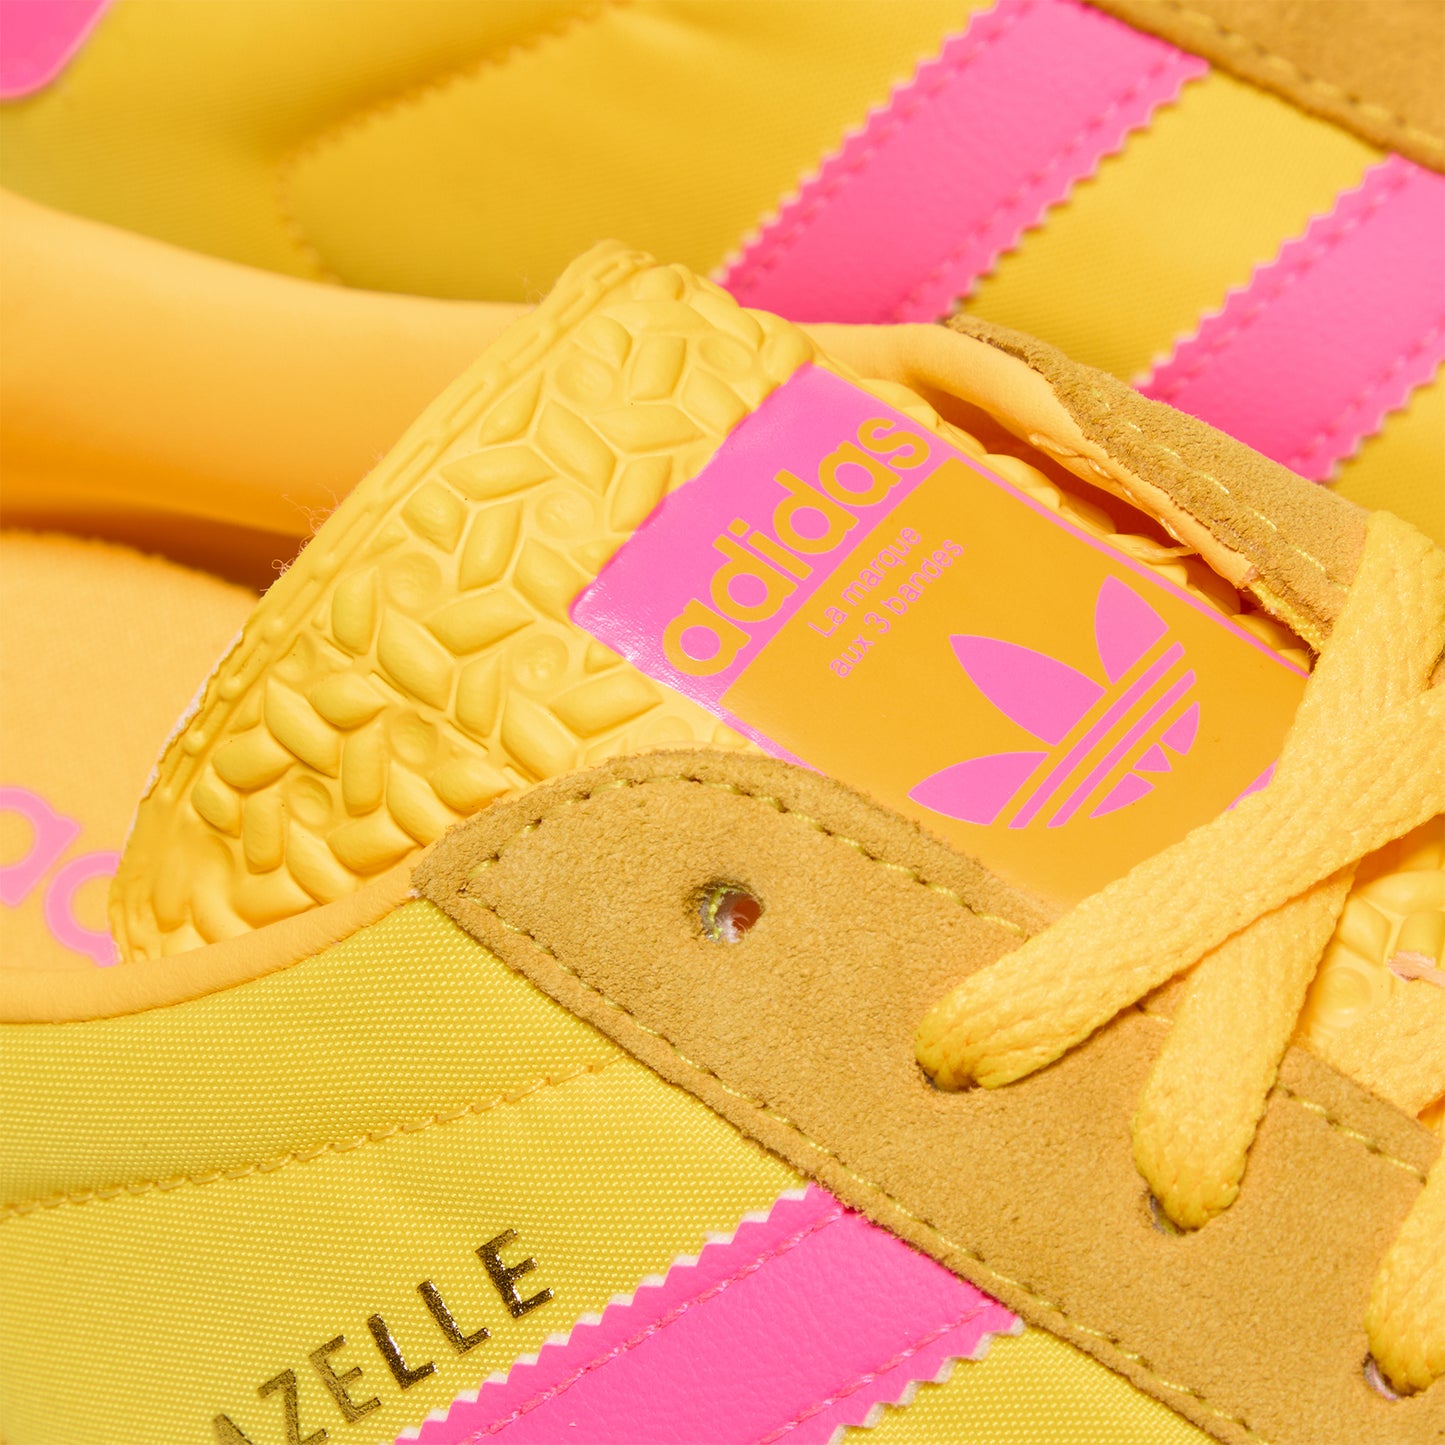 adidas Womens Gazelle Bold (Spark/Lucid Pink)